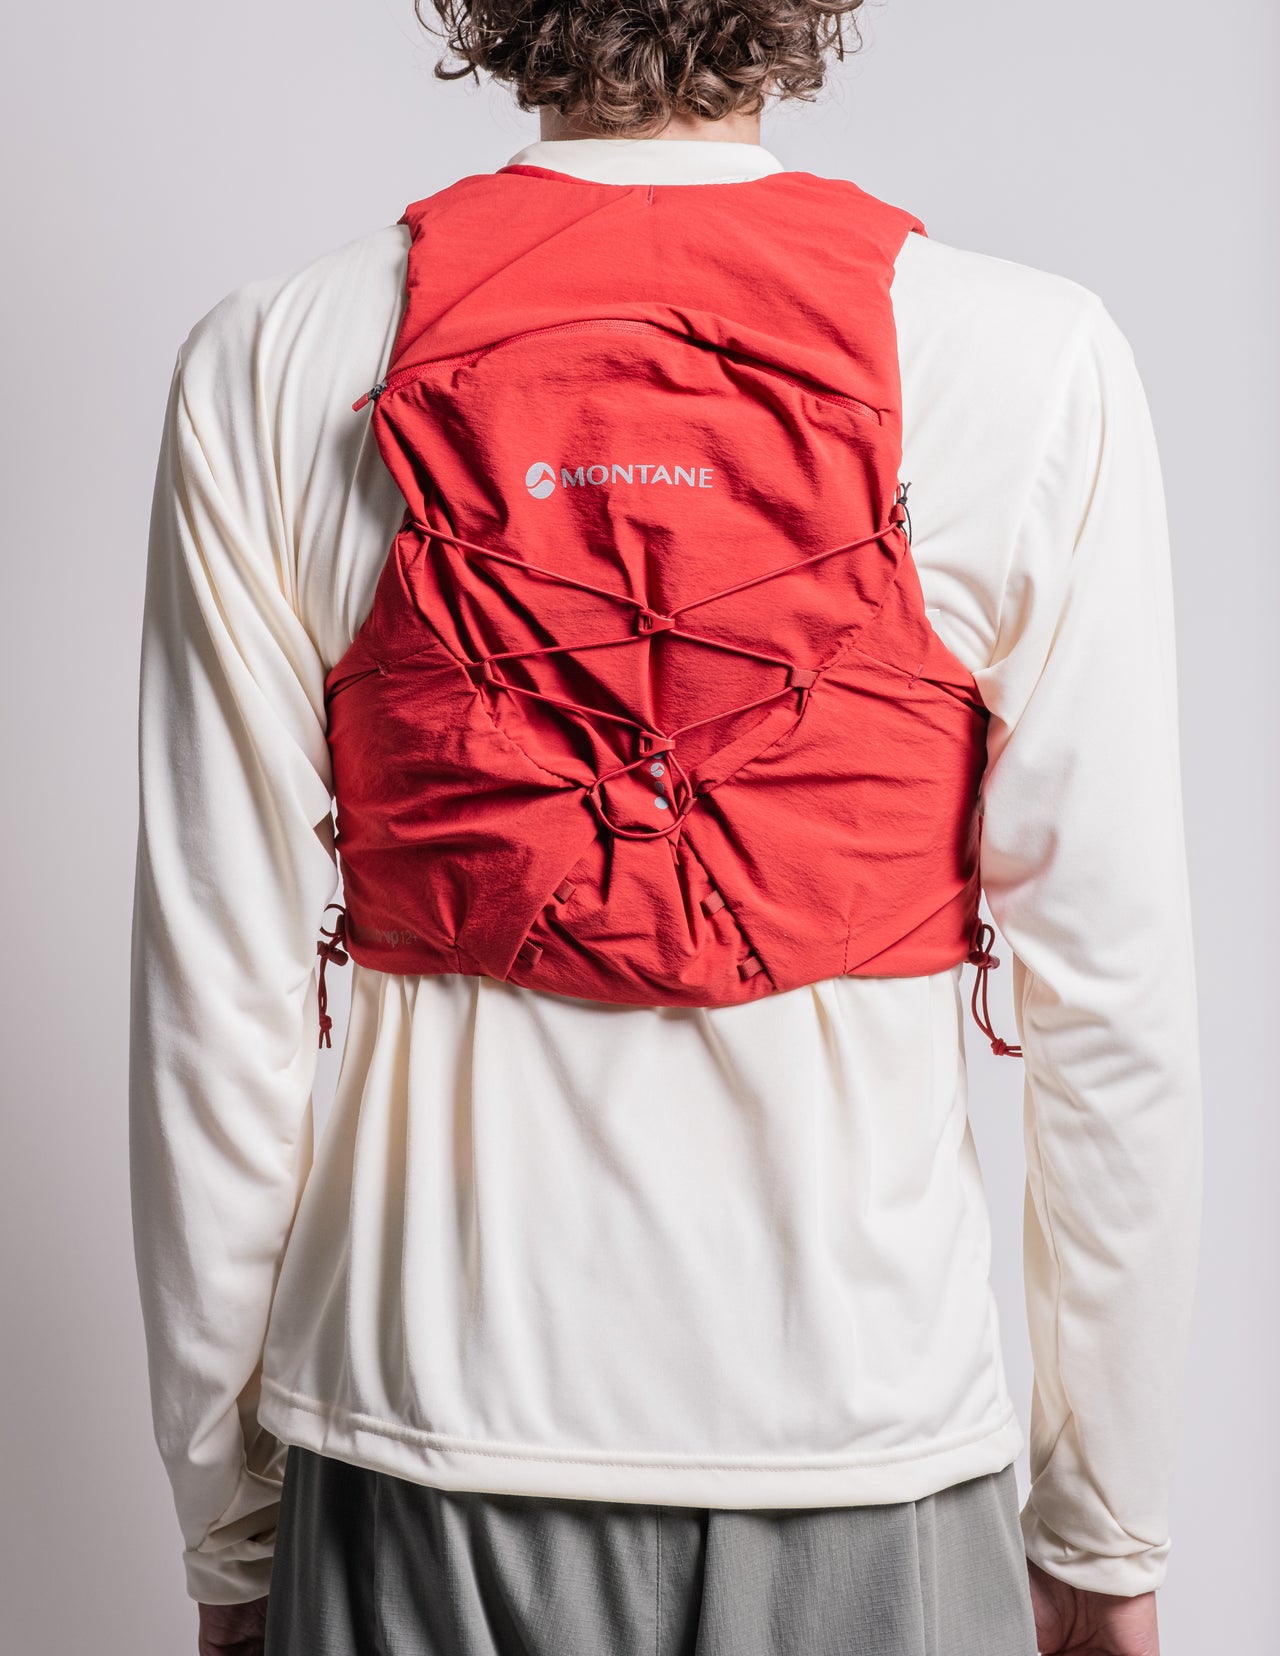 Gecko VP 12+ Running Vest in Acer Red